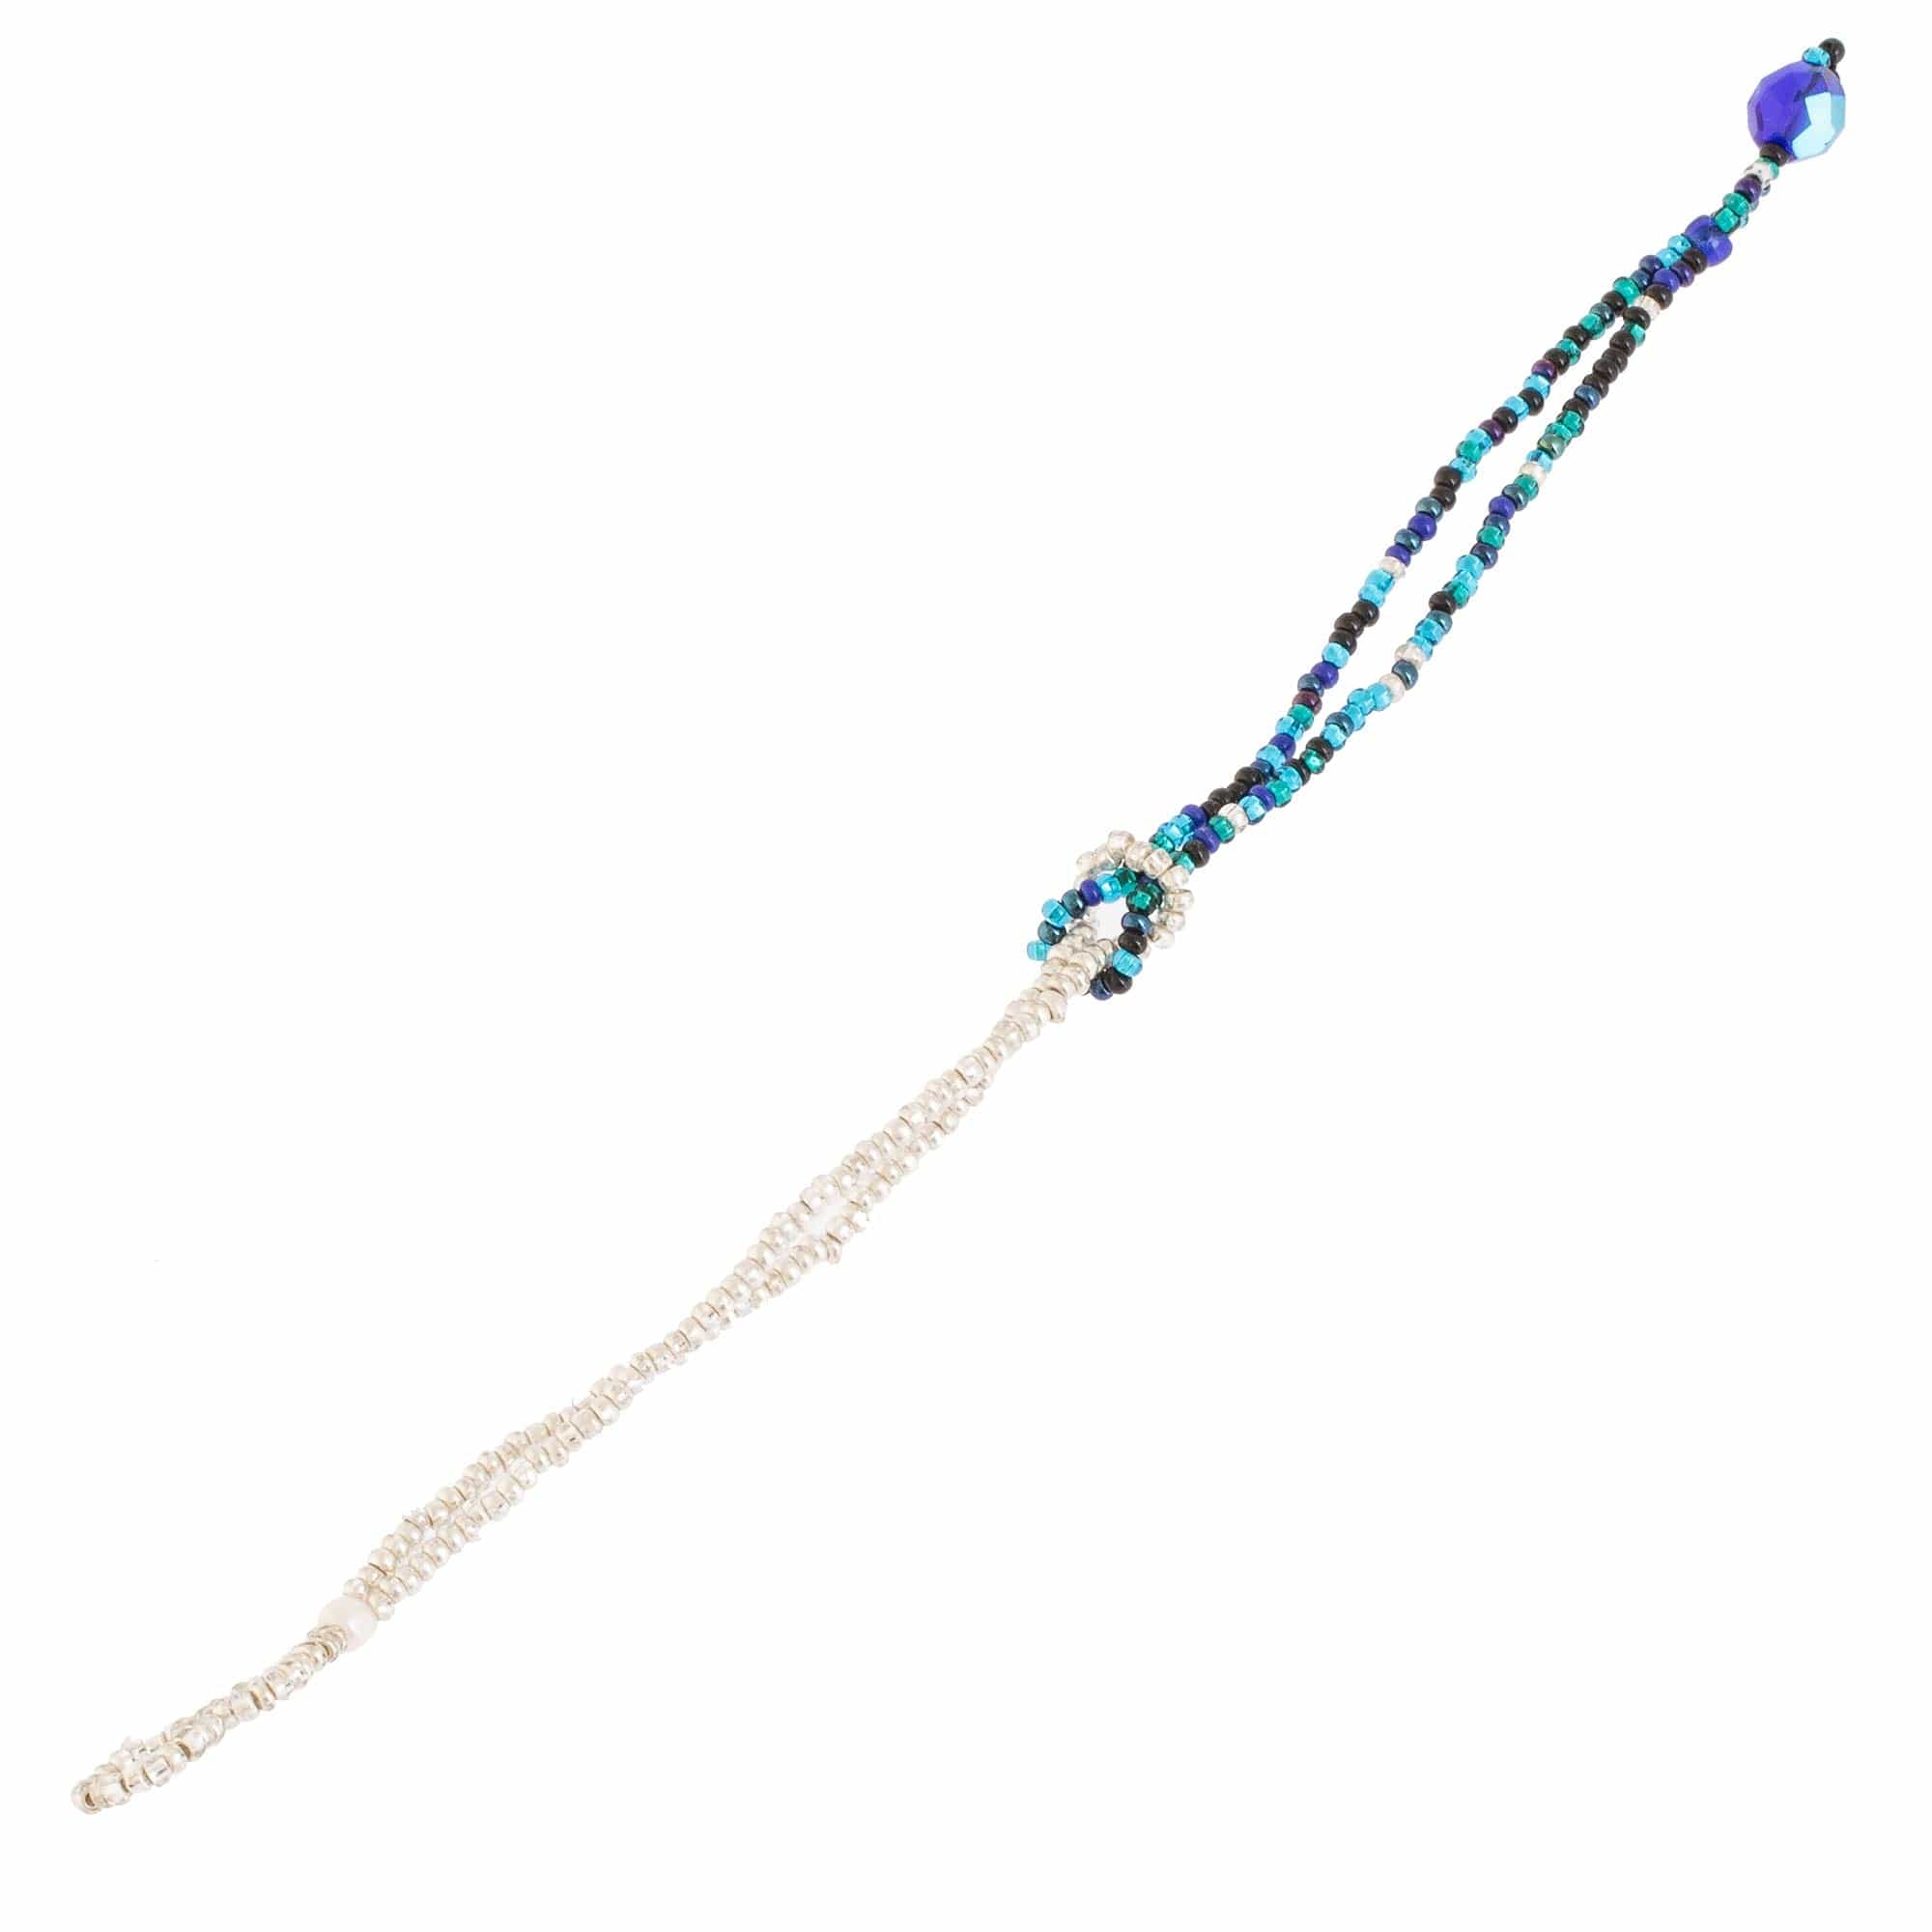 NEW! Right Angle Weave Glass Bead Bracelet Kit (Green & Peach) –